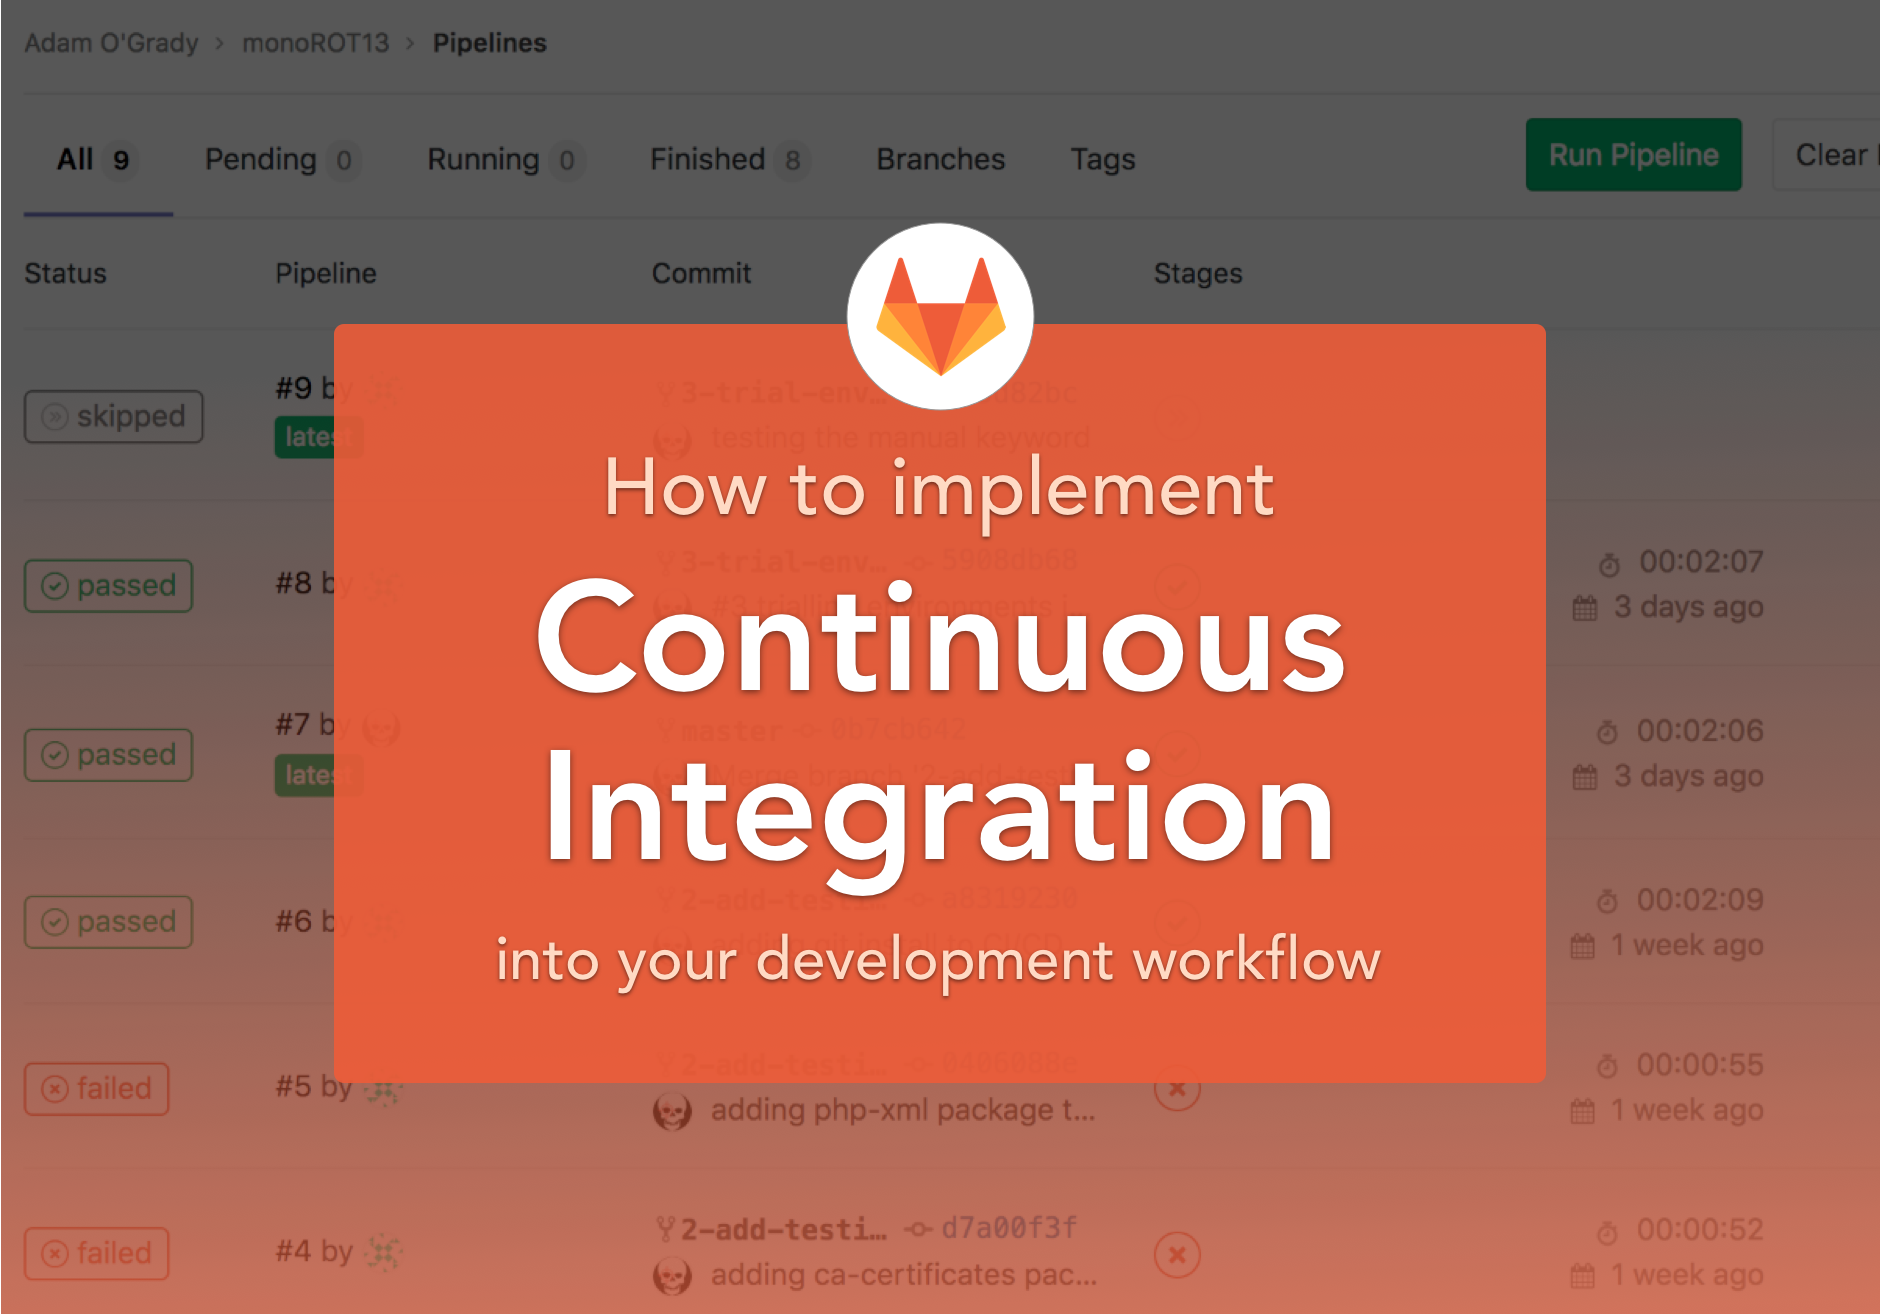 Implement Continuous Integration into your development workflow